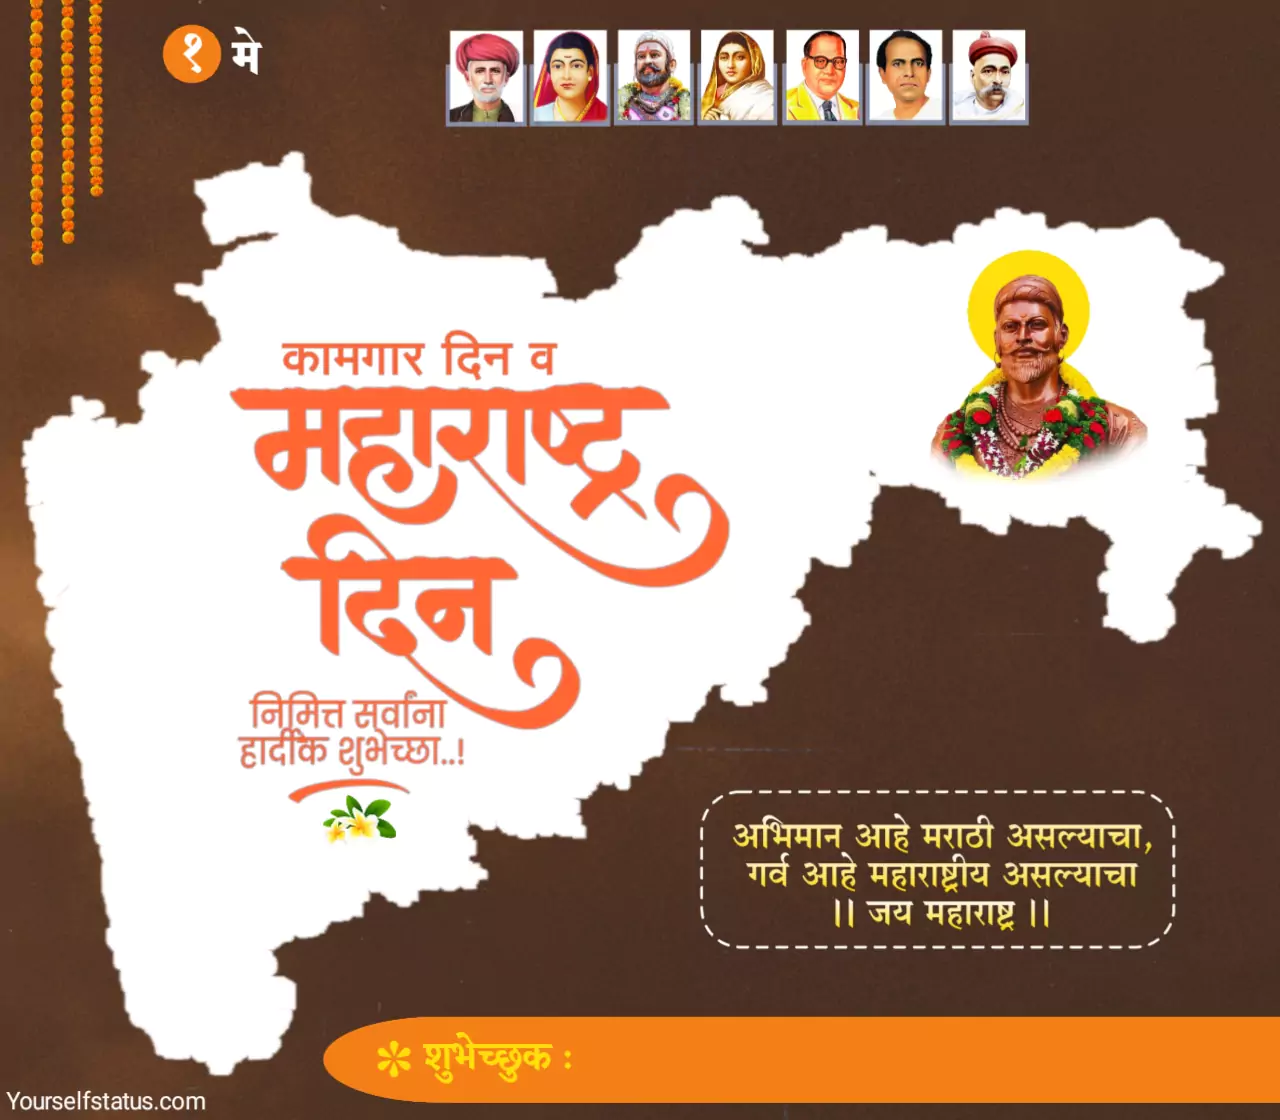 Maharashtra day banner in marathi